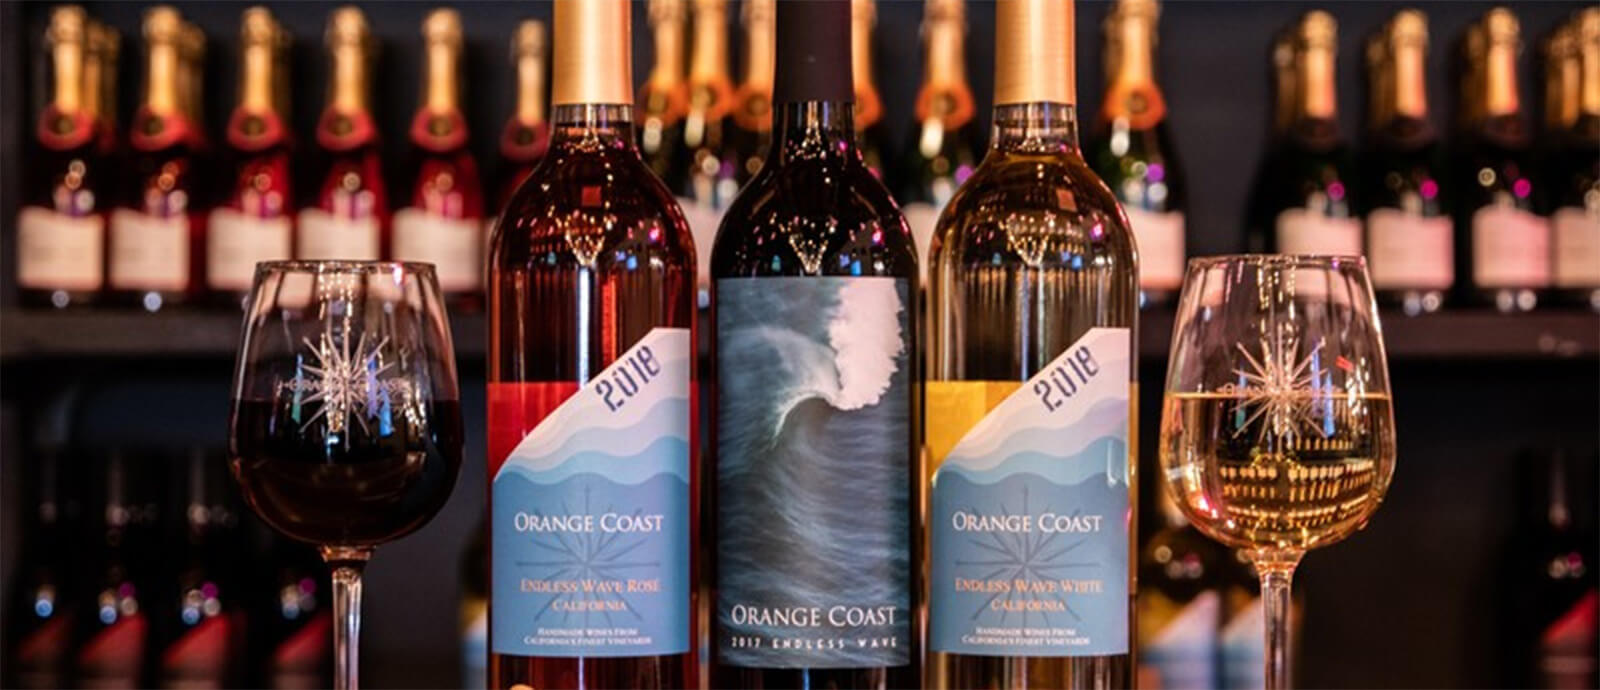 Three bottles of orange coast wine in between two wine glasses atop a wooden countertop.